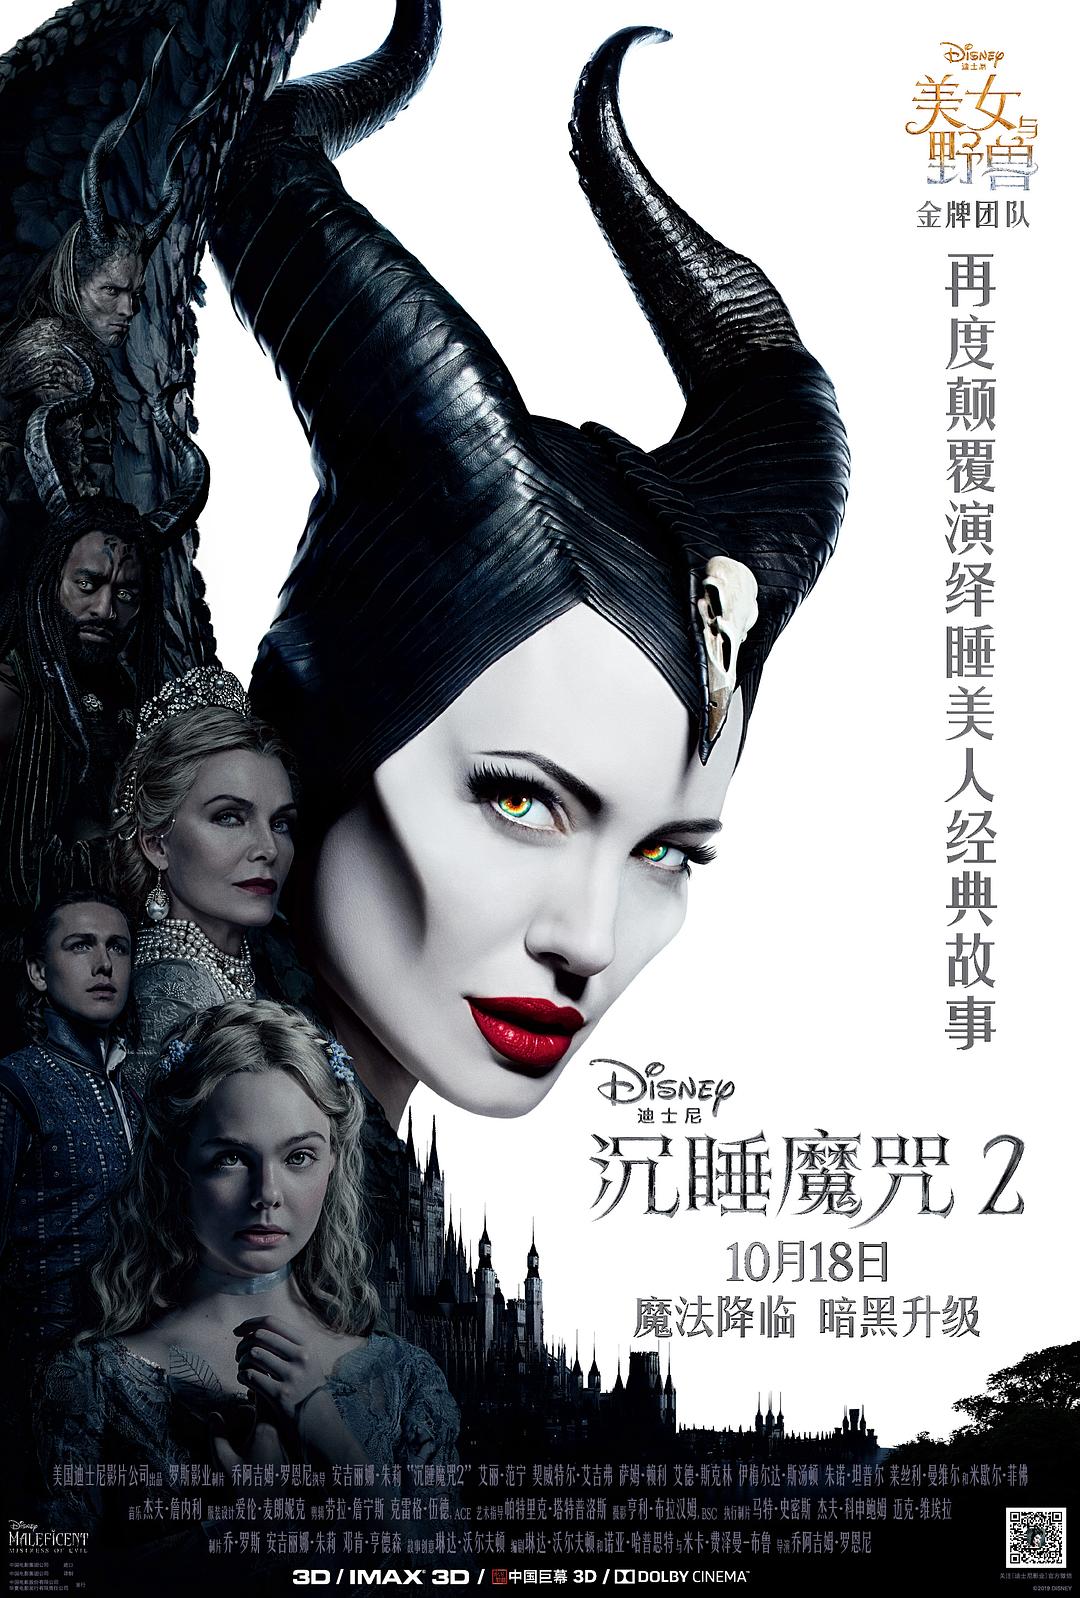 沉睡魔咒2 Maleficent.Mistress.of.Evil.2019.1080p.3D.BluRay.Half-OU.x264.DTS-HD.MA.7.1-FGT 19.39GB-1.png